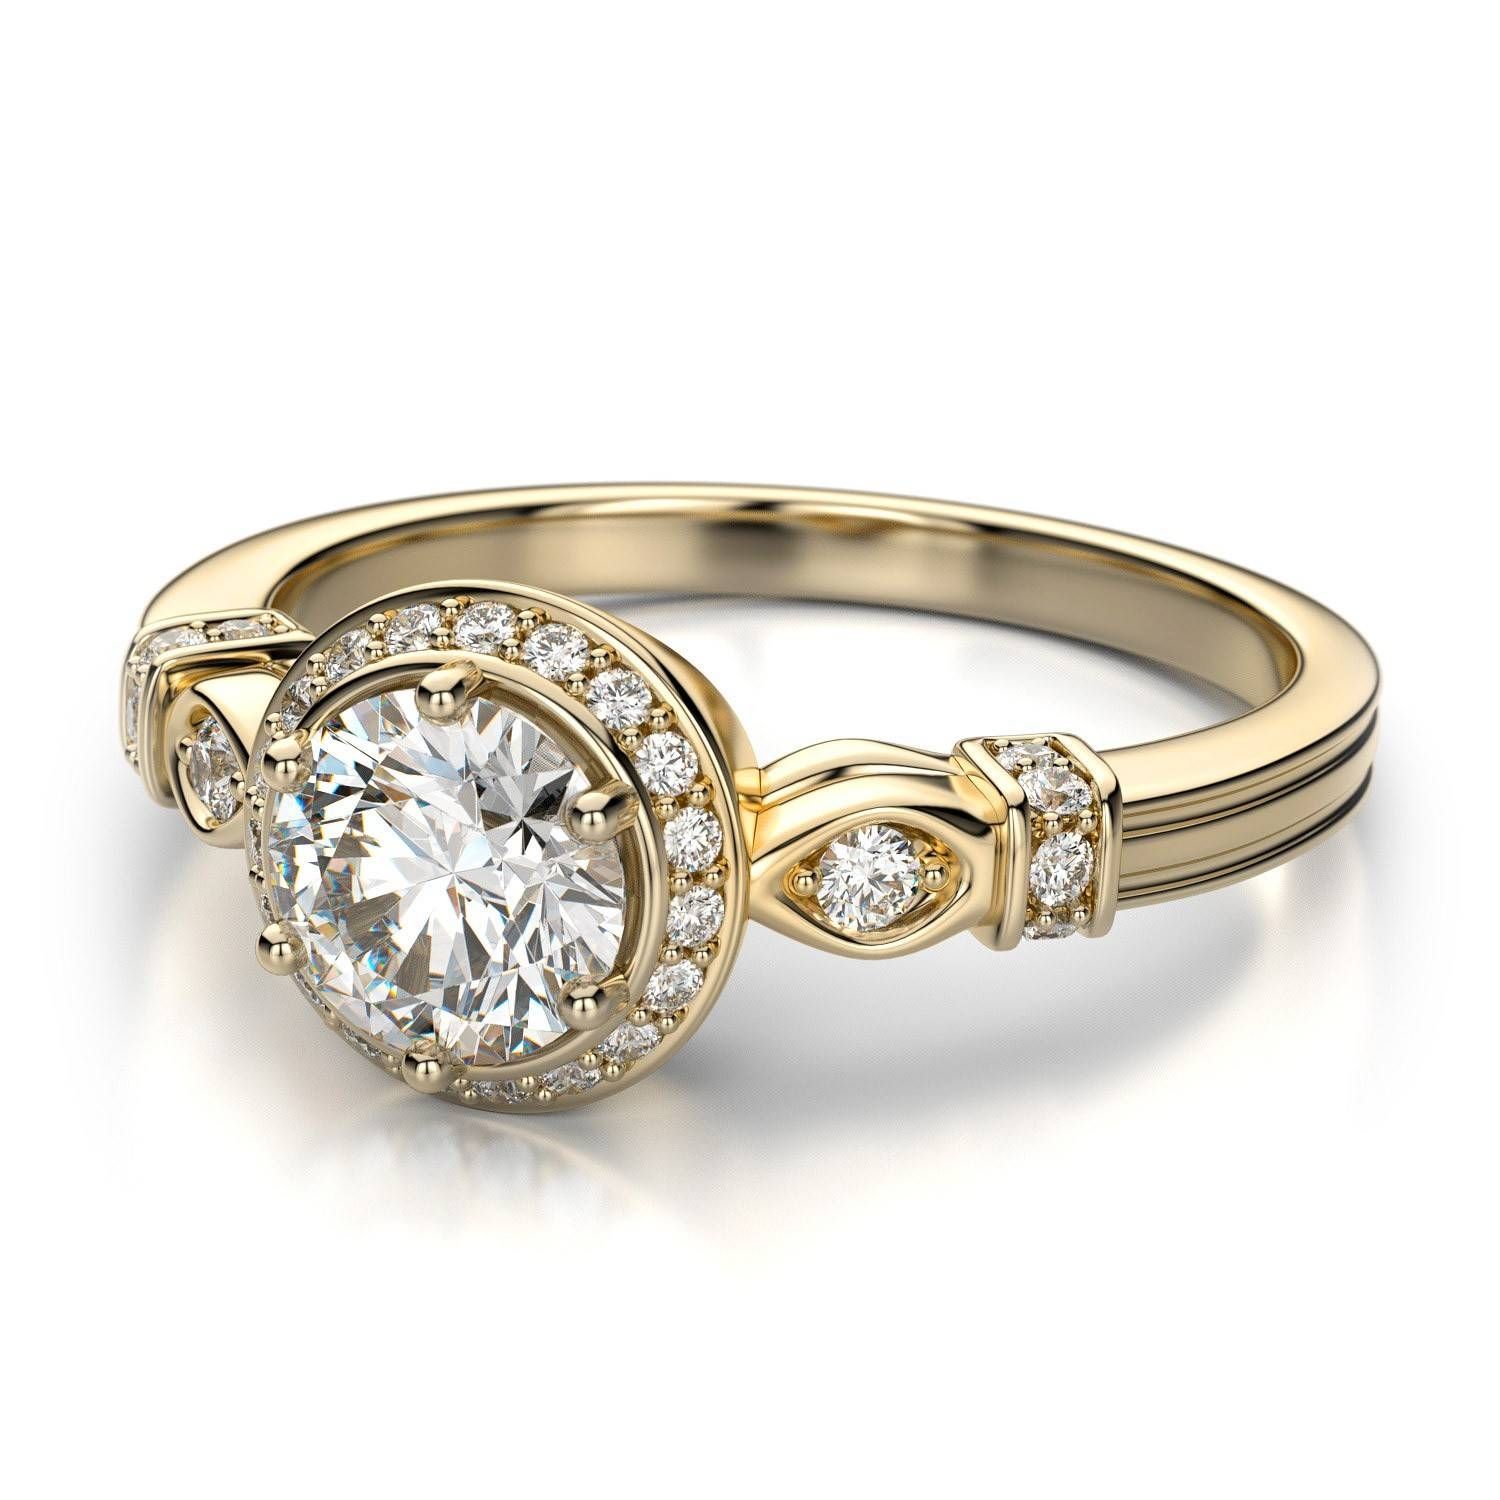 Wedding Rings : Wedding Rings Sets At Walmart His And Her Rings Regarding Vintage Yellow Gold Wedding Rings (View 2 of 15)